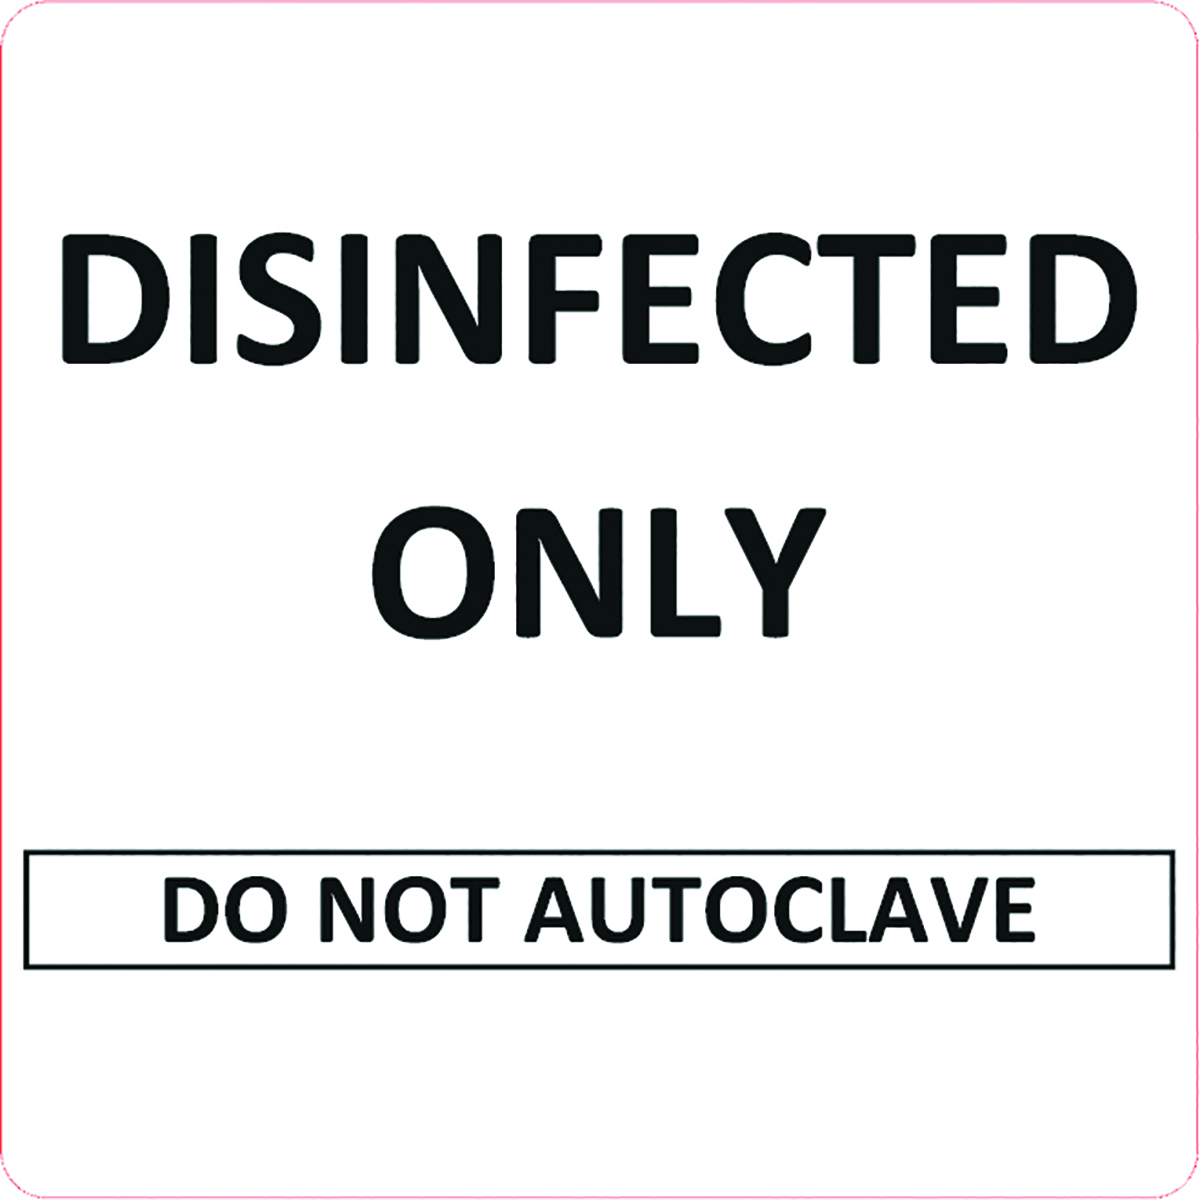 Disinfect Alert Label  Image